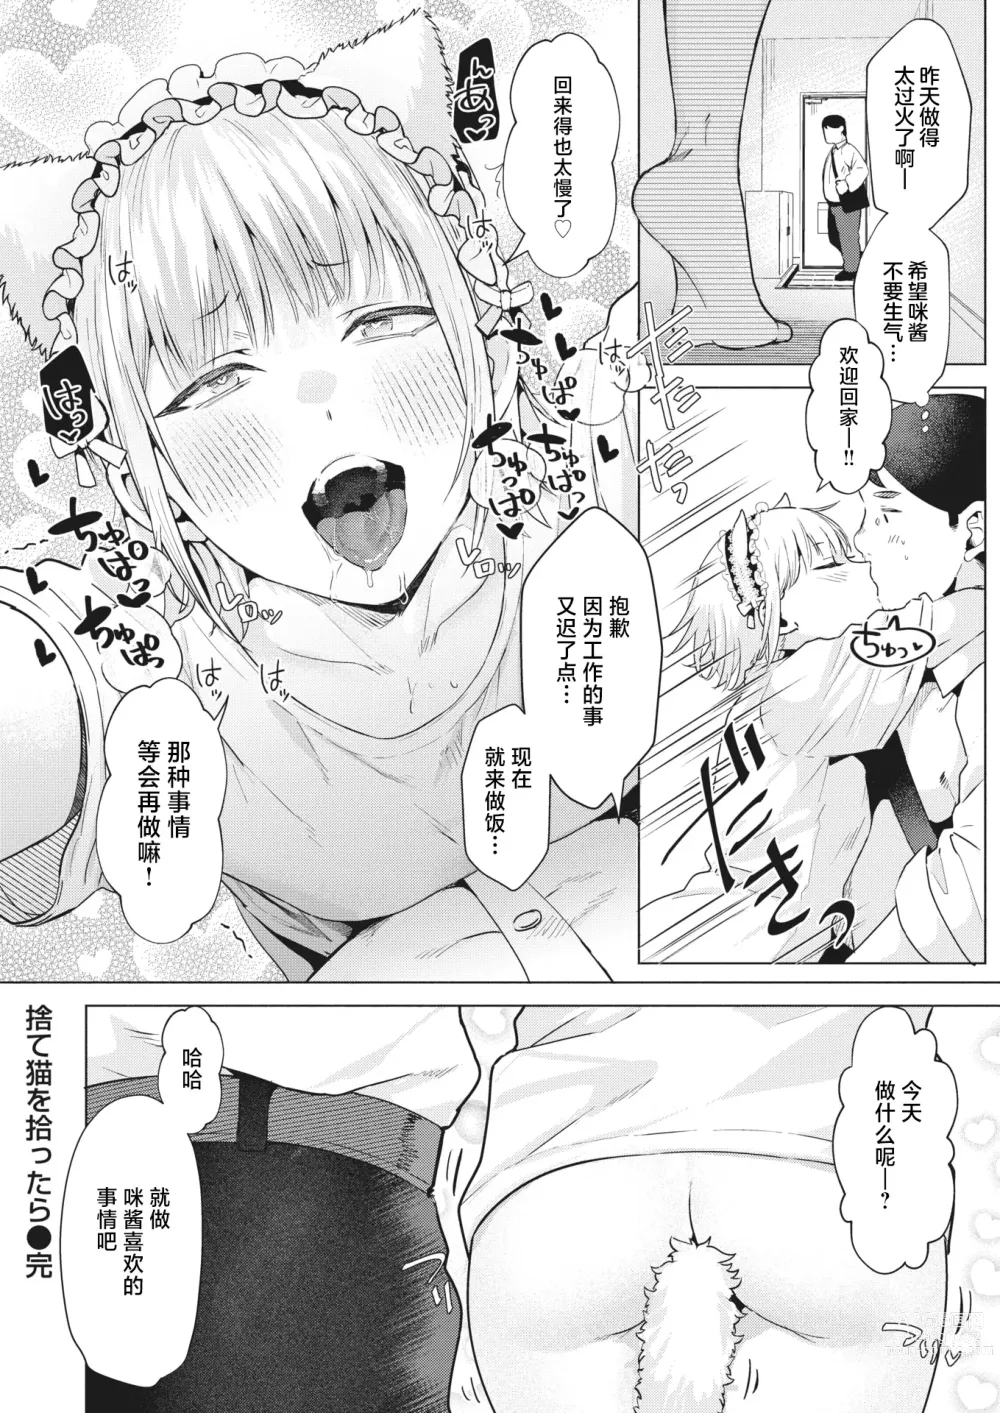 Page 28 of manga Suteneko o Hirottara